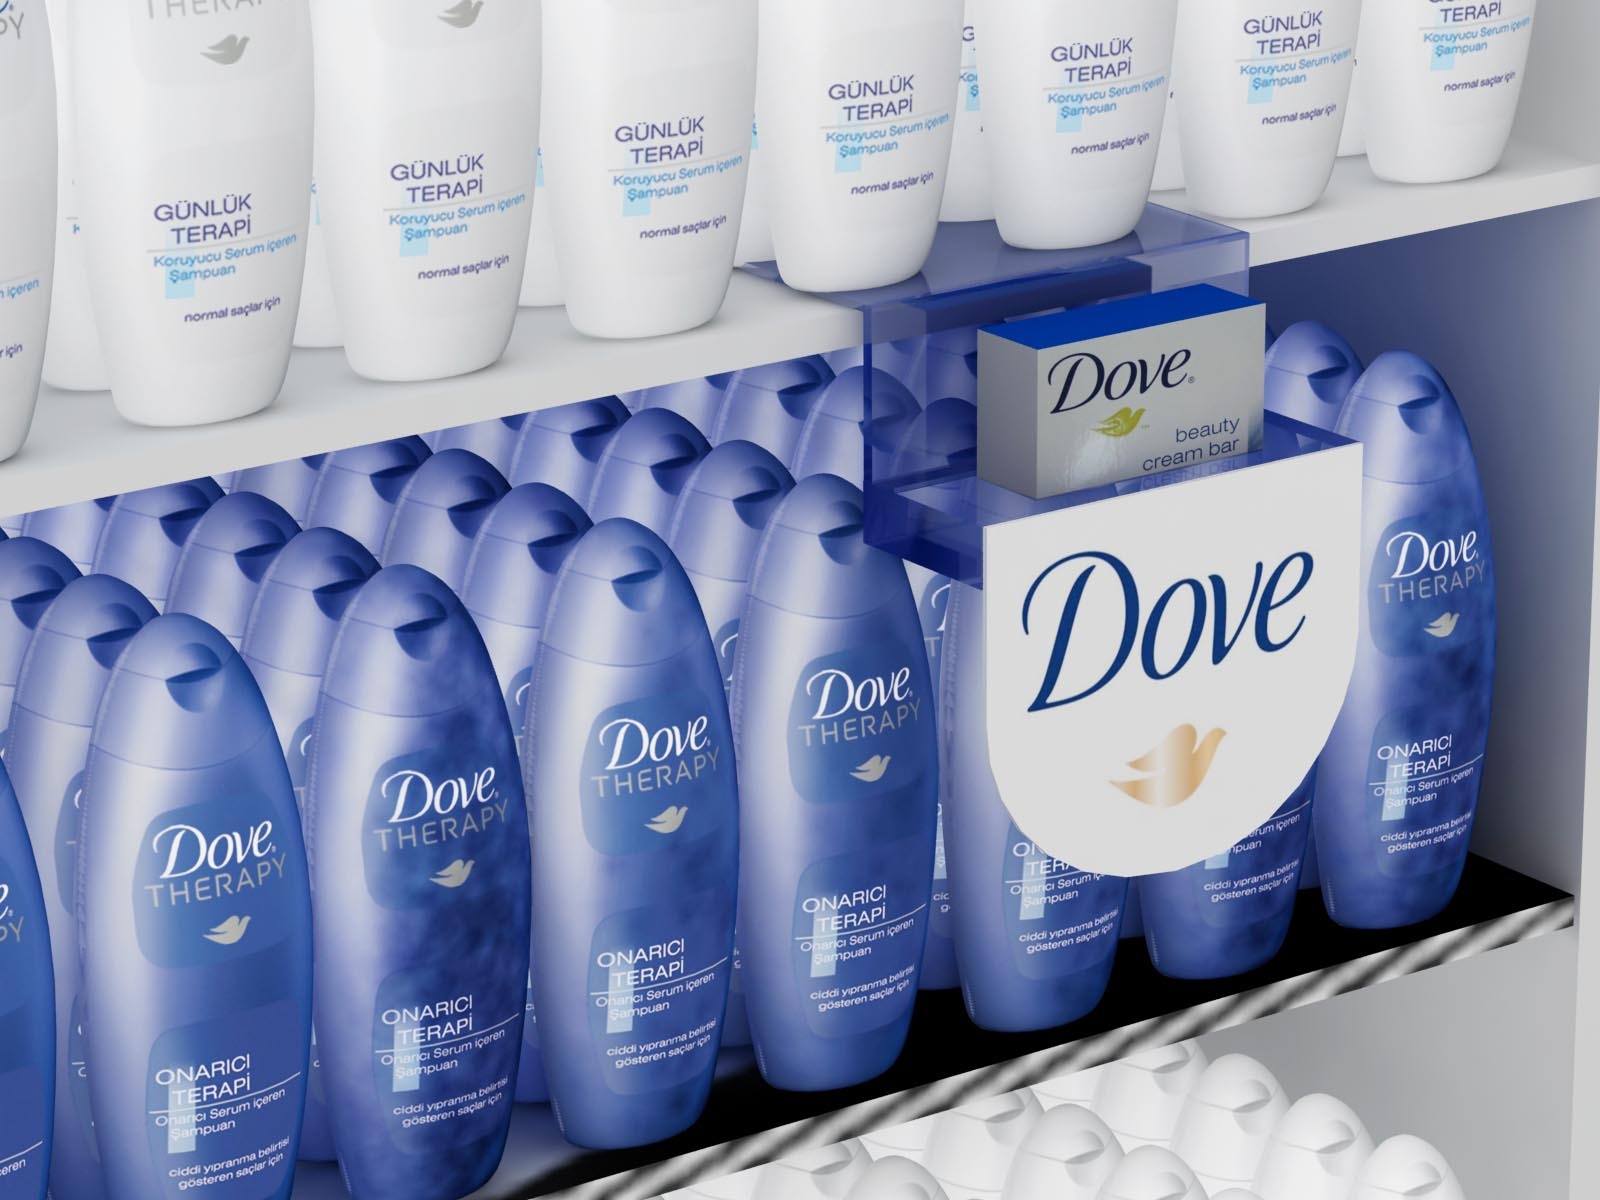 Dove Coupons (Soap, Body Wash, Deodorant) - Printable Coupons 2018 - Free Dove Soap Coupons Printable